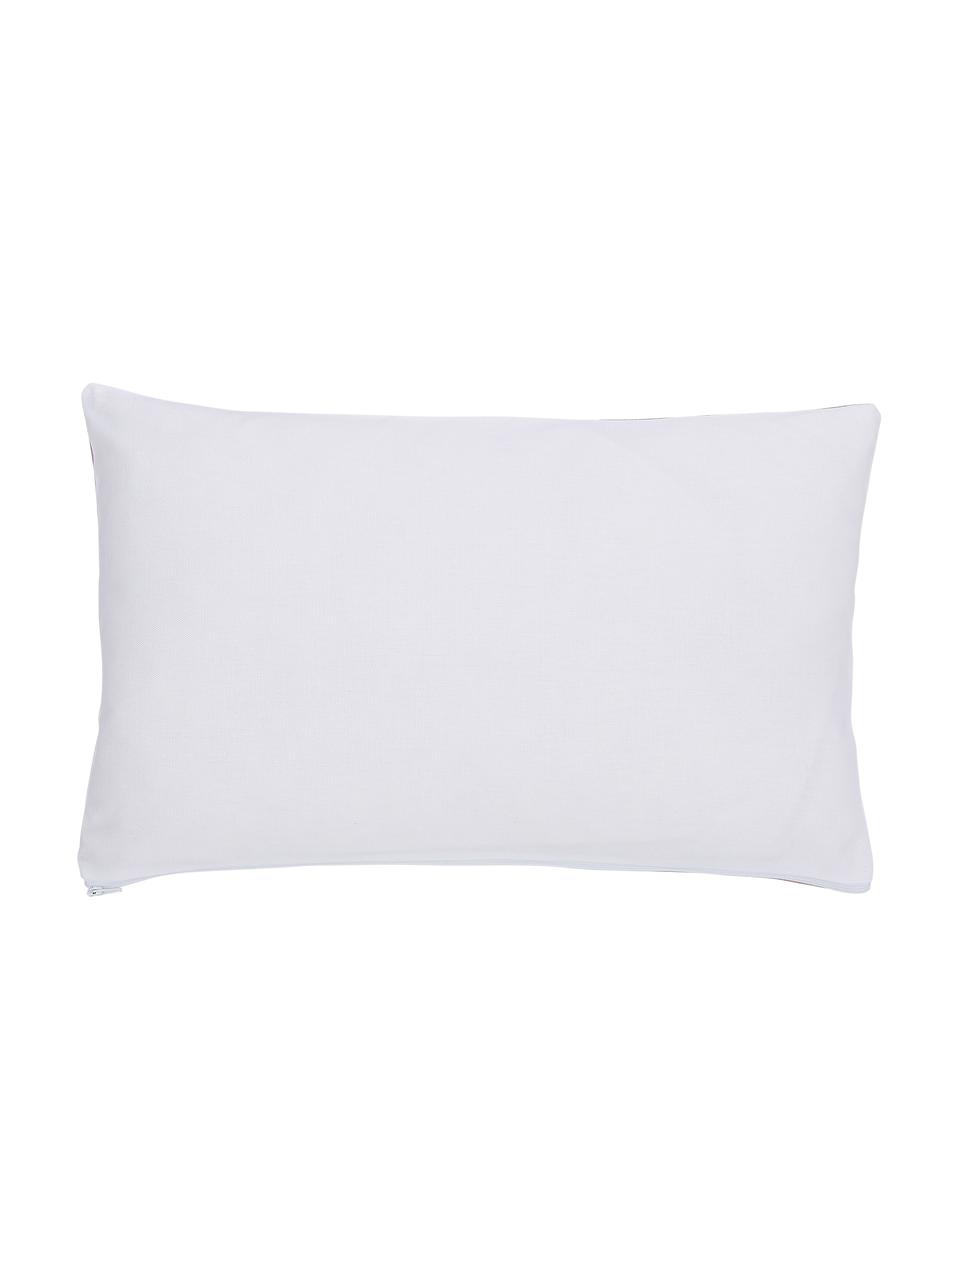 Gestreifte Kissenhülle Ren in Altrosa/White, 100% Baumwolle, Weiß, Altrosa, B 30 x L 50 cm